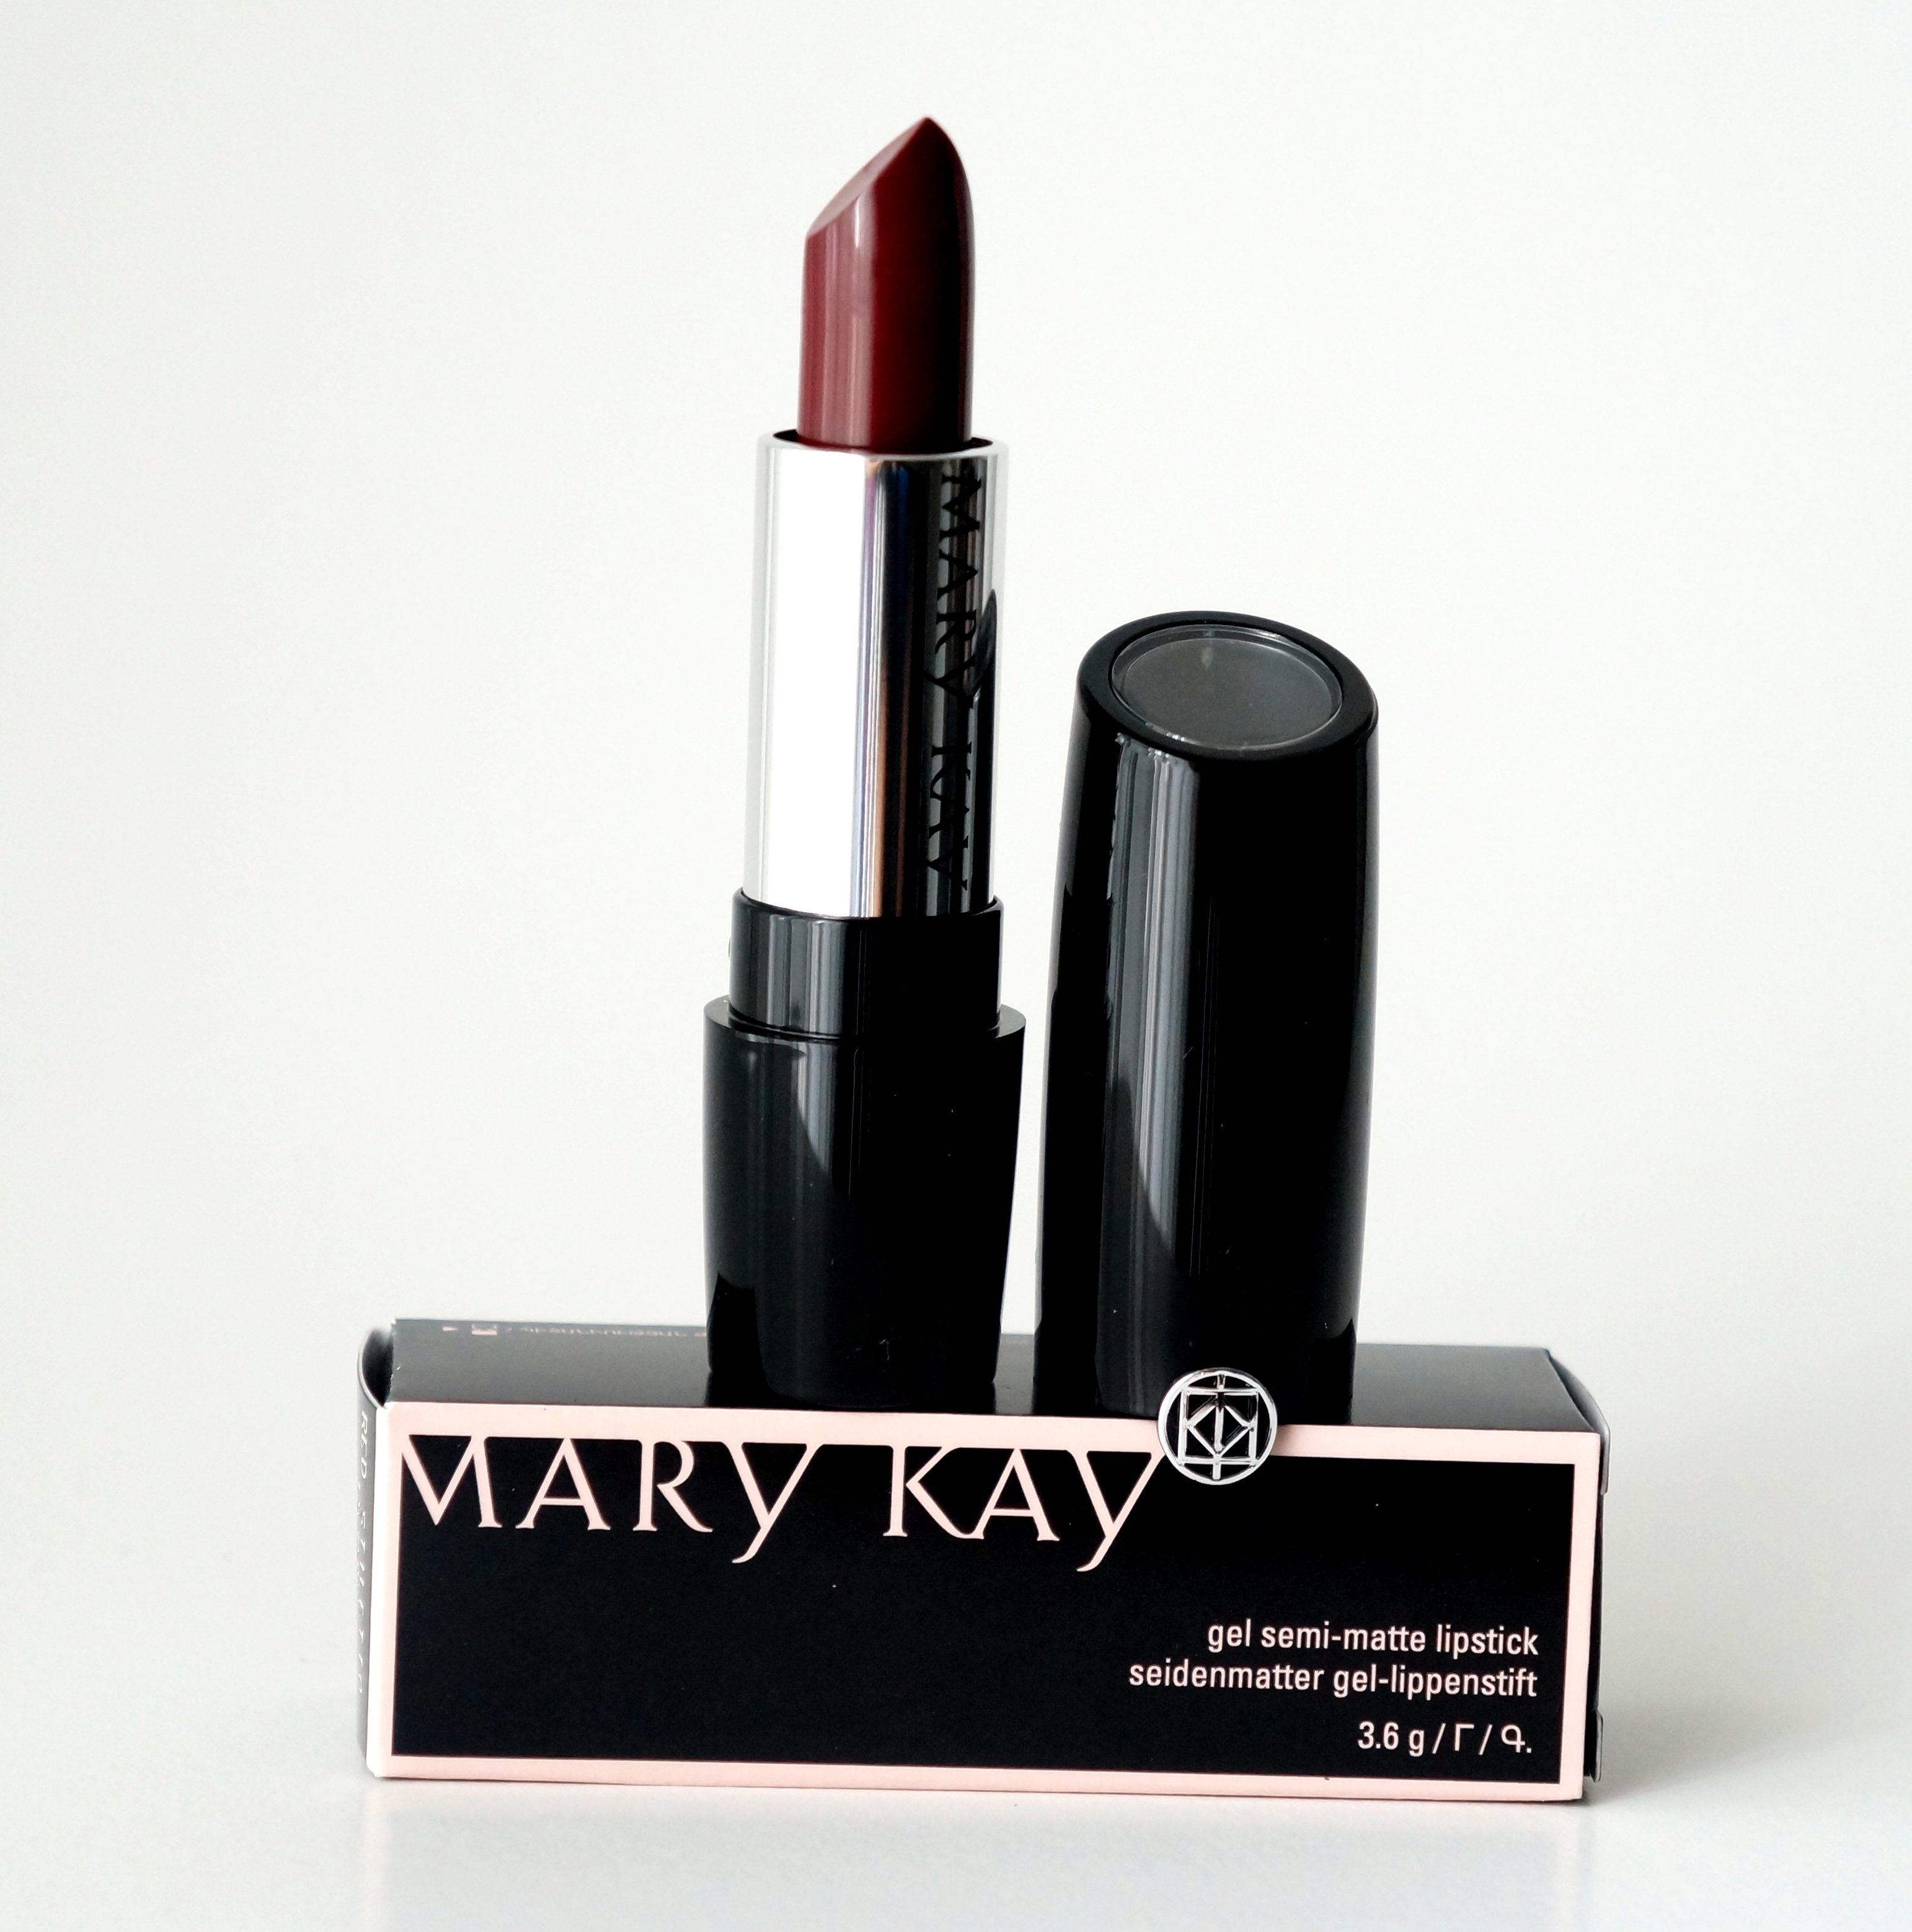 Mary Kay Lippenstift Gel Semi-Matte Lipstick seidenmatter Lippenstift 3,6g